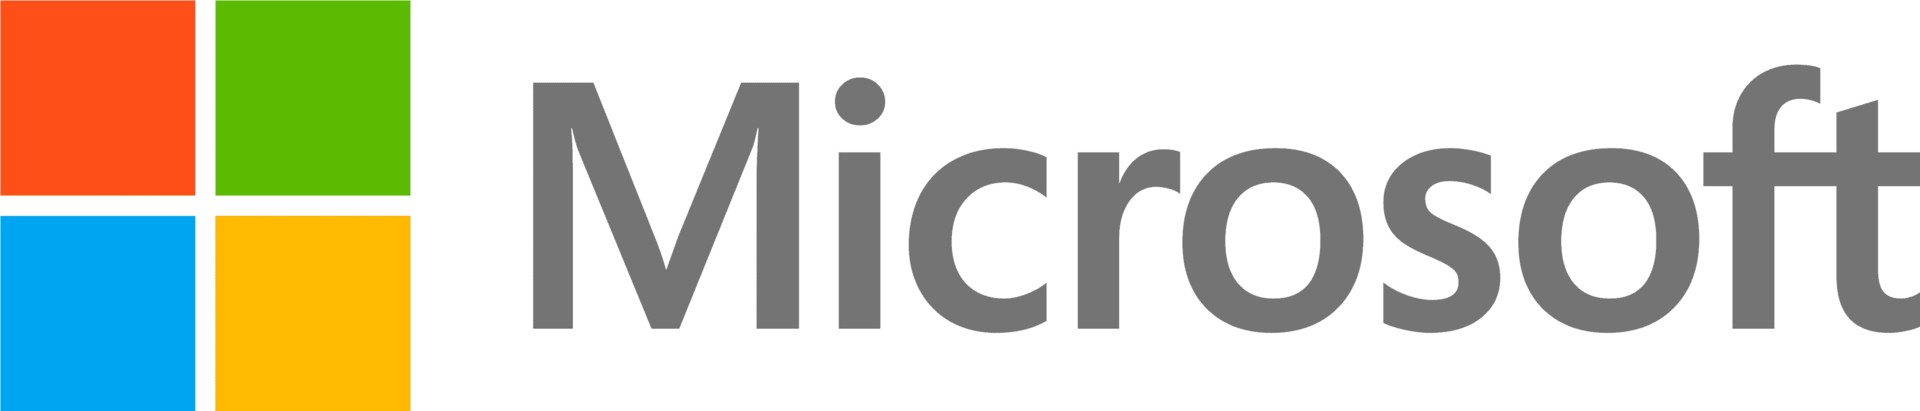 Microsoft DG7GMGF0F4MD.0005 Software-Lizenz/-Upgrade 1 Lizenz(en) (DG7GMGF0F4MD.0005)